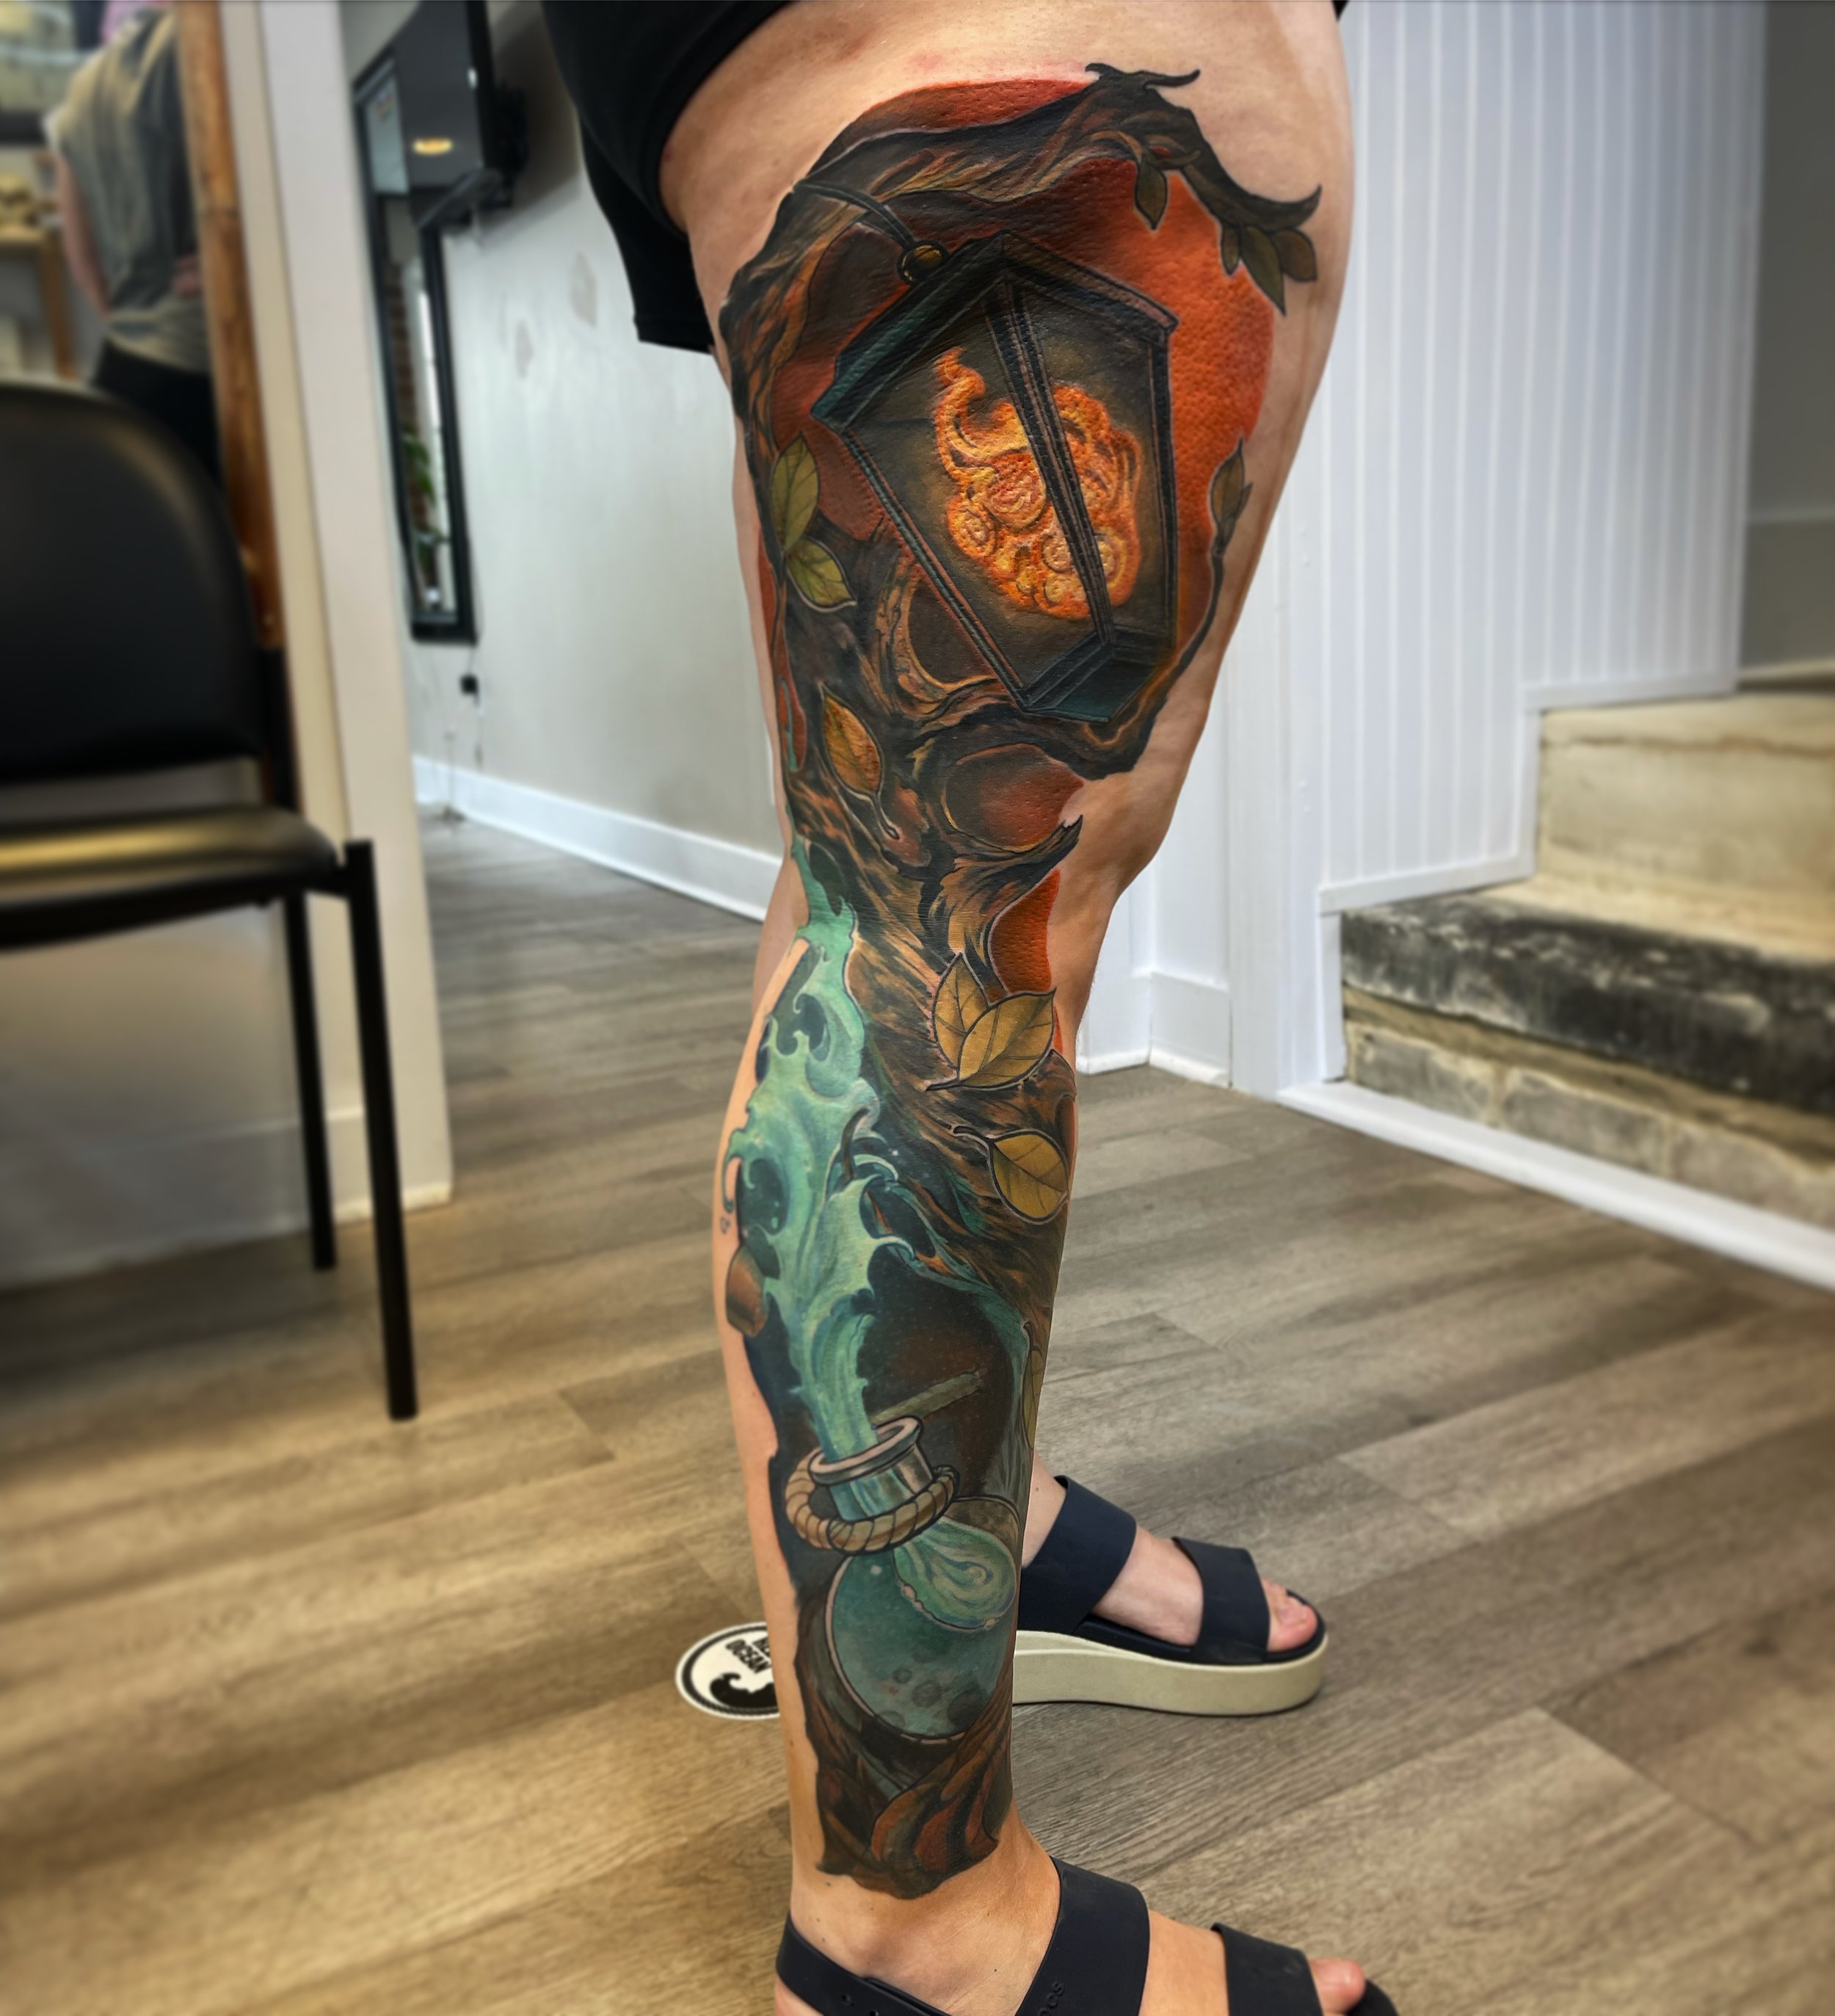 Ben Kelly — Red Ocean Tattoo